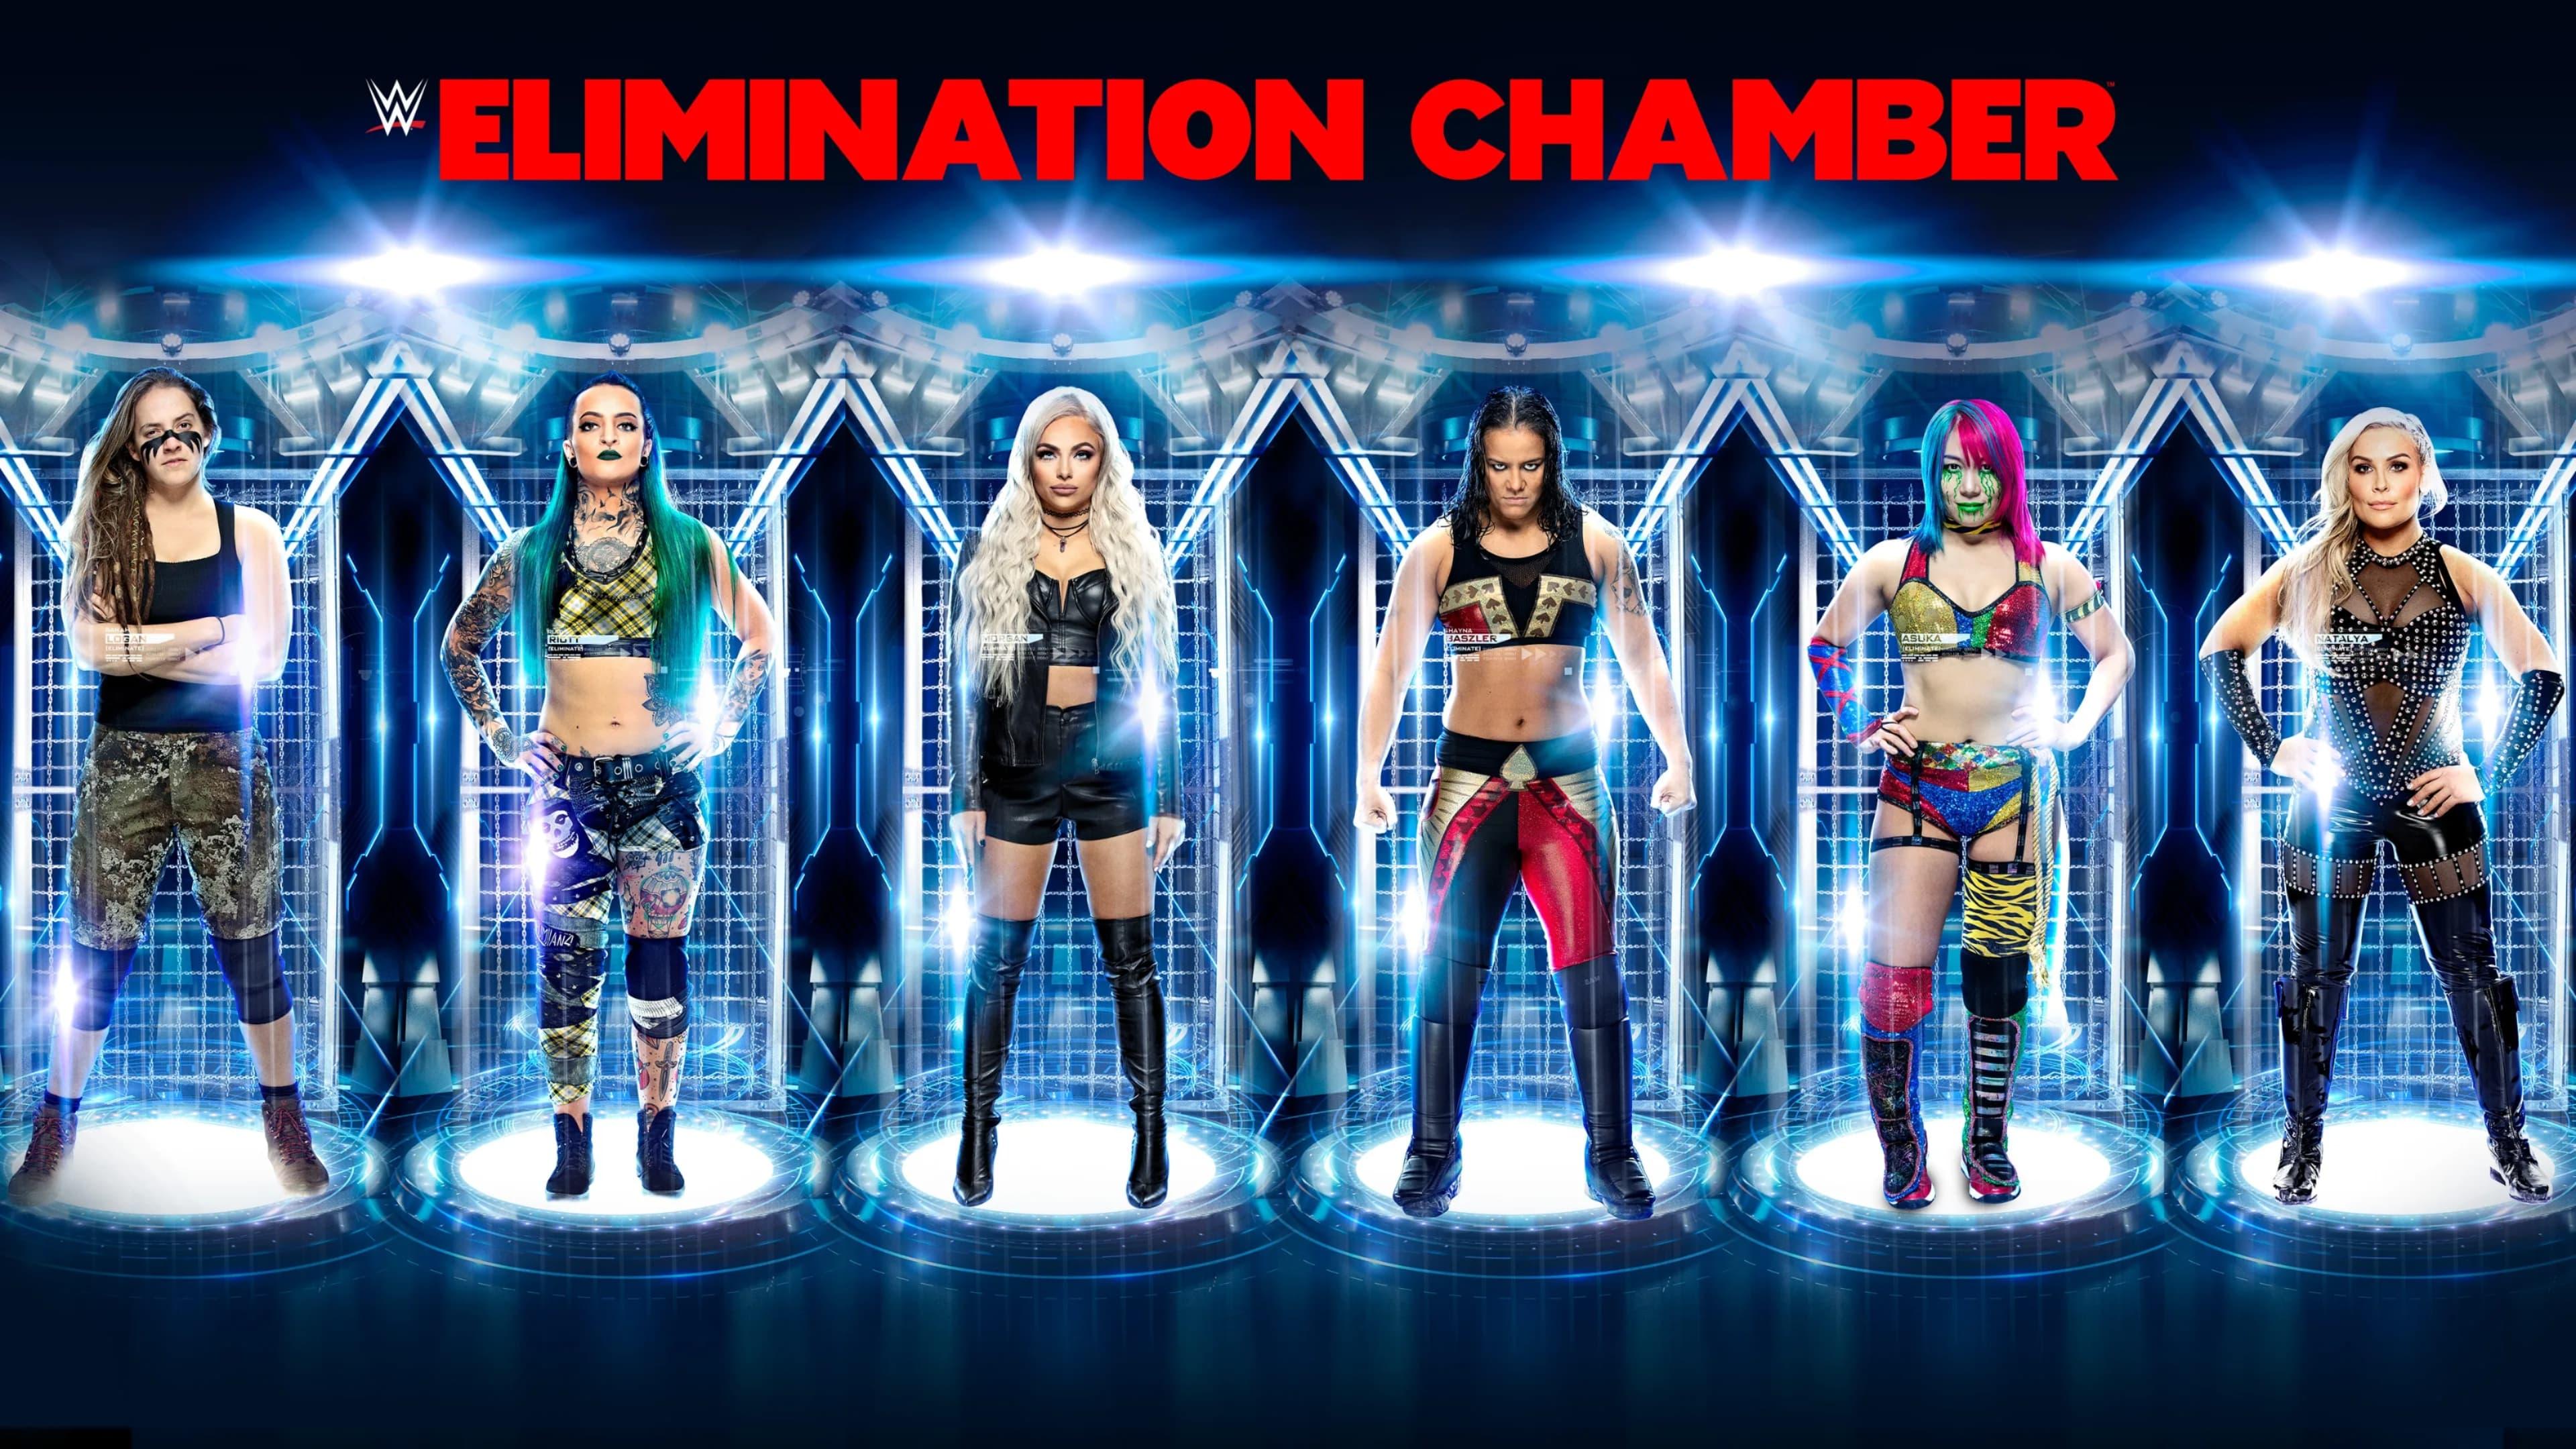 WWE Elimination Chamber 2020 backdrop